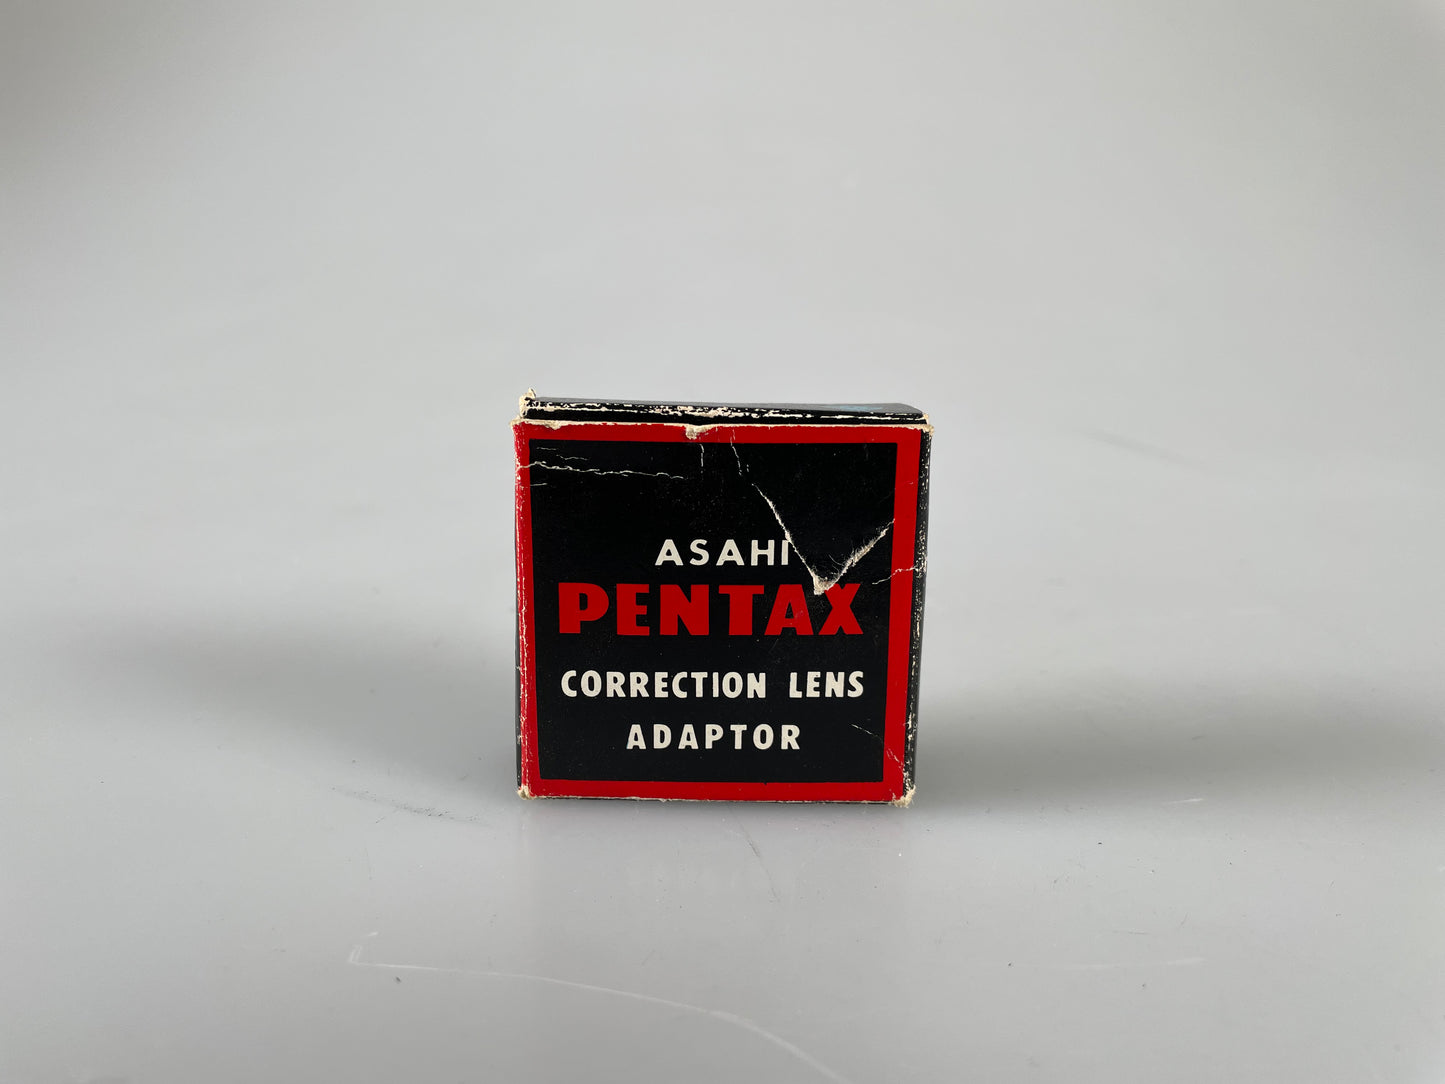 Asahi Pentax Viewfinder Correction Lens - Lens Adapter Correction w/ Box